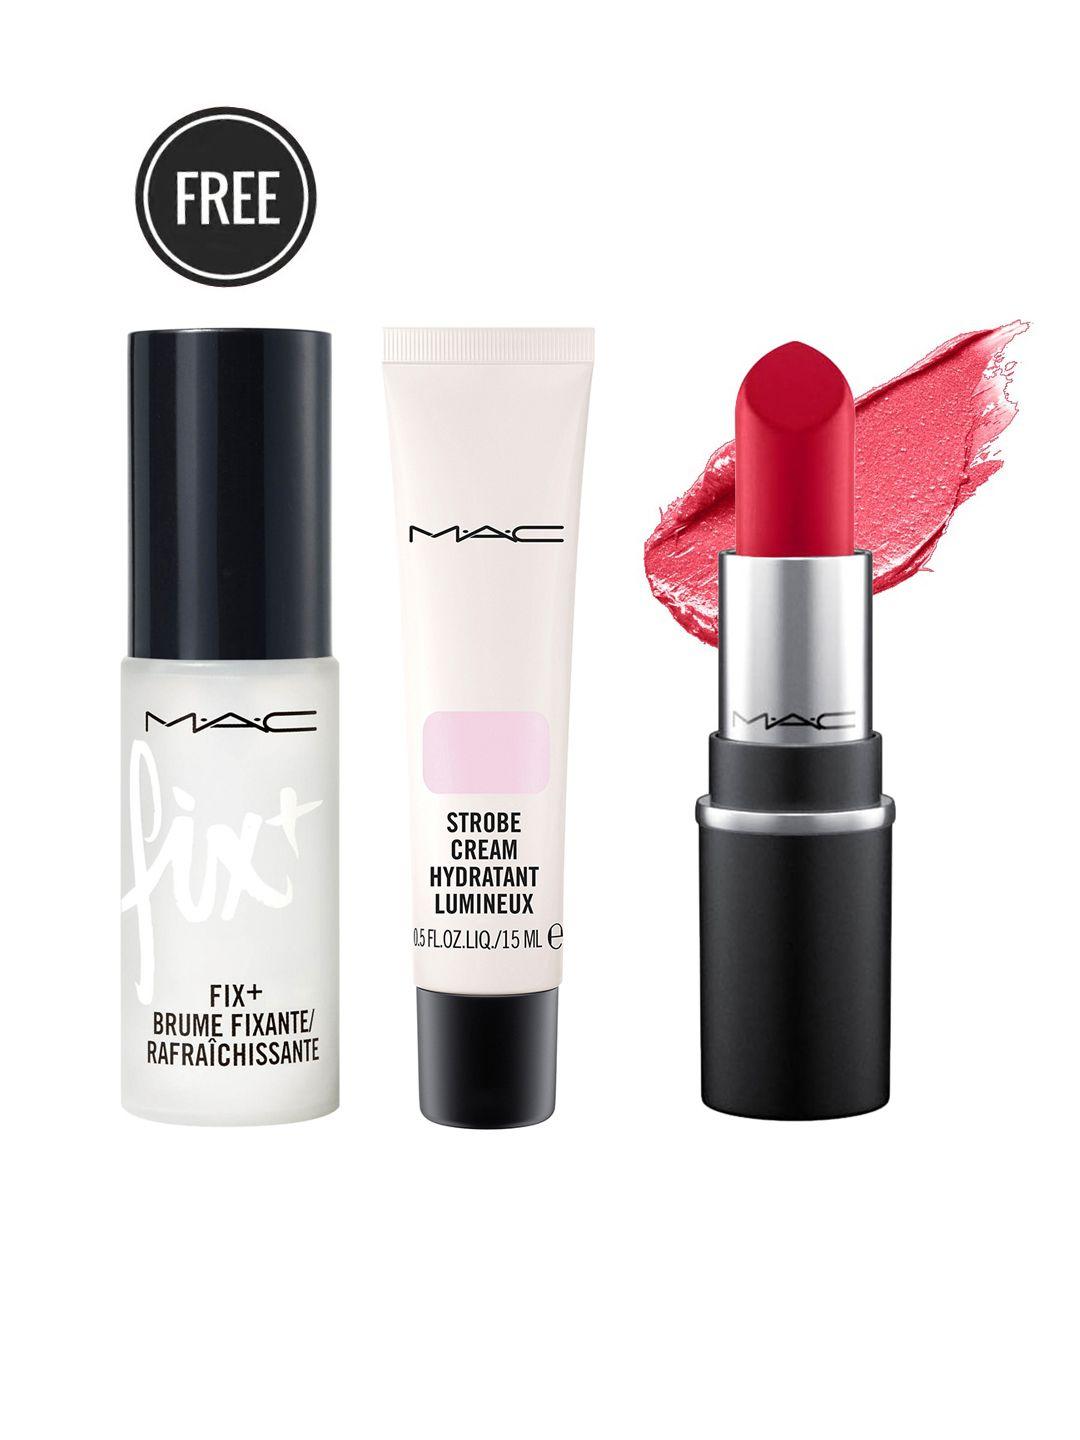 m.a.c set of strobe cream + lipstick & sample primer